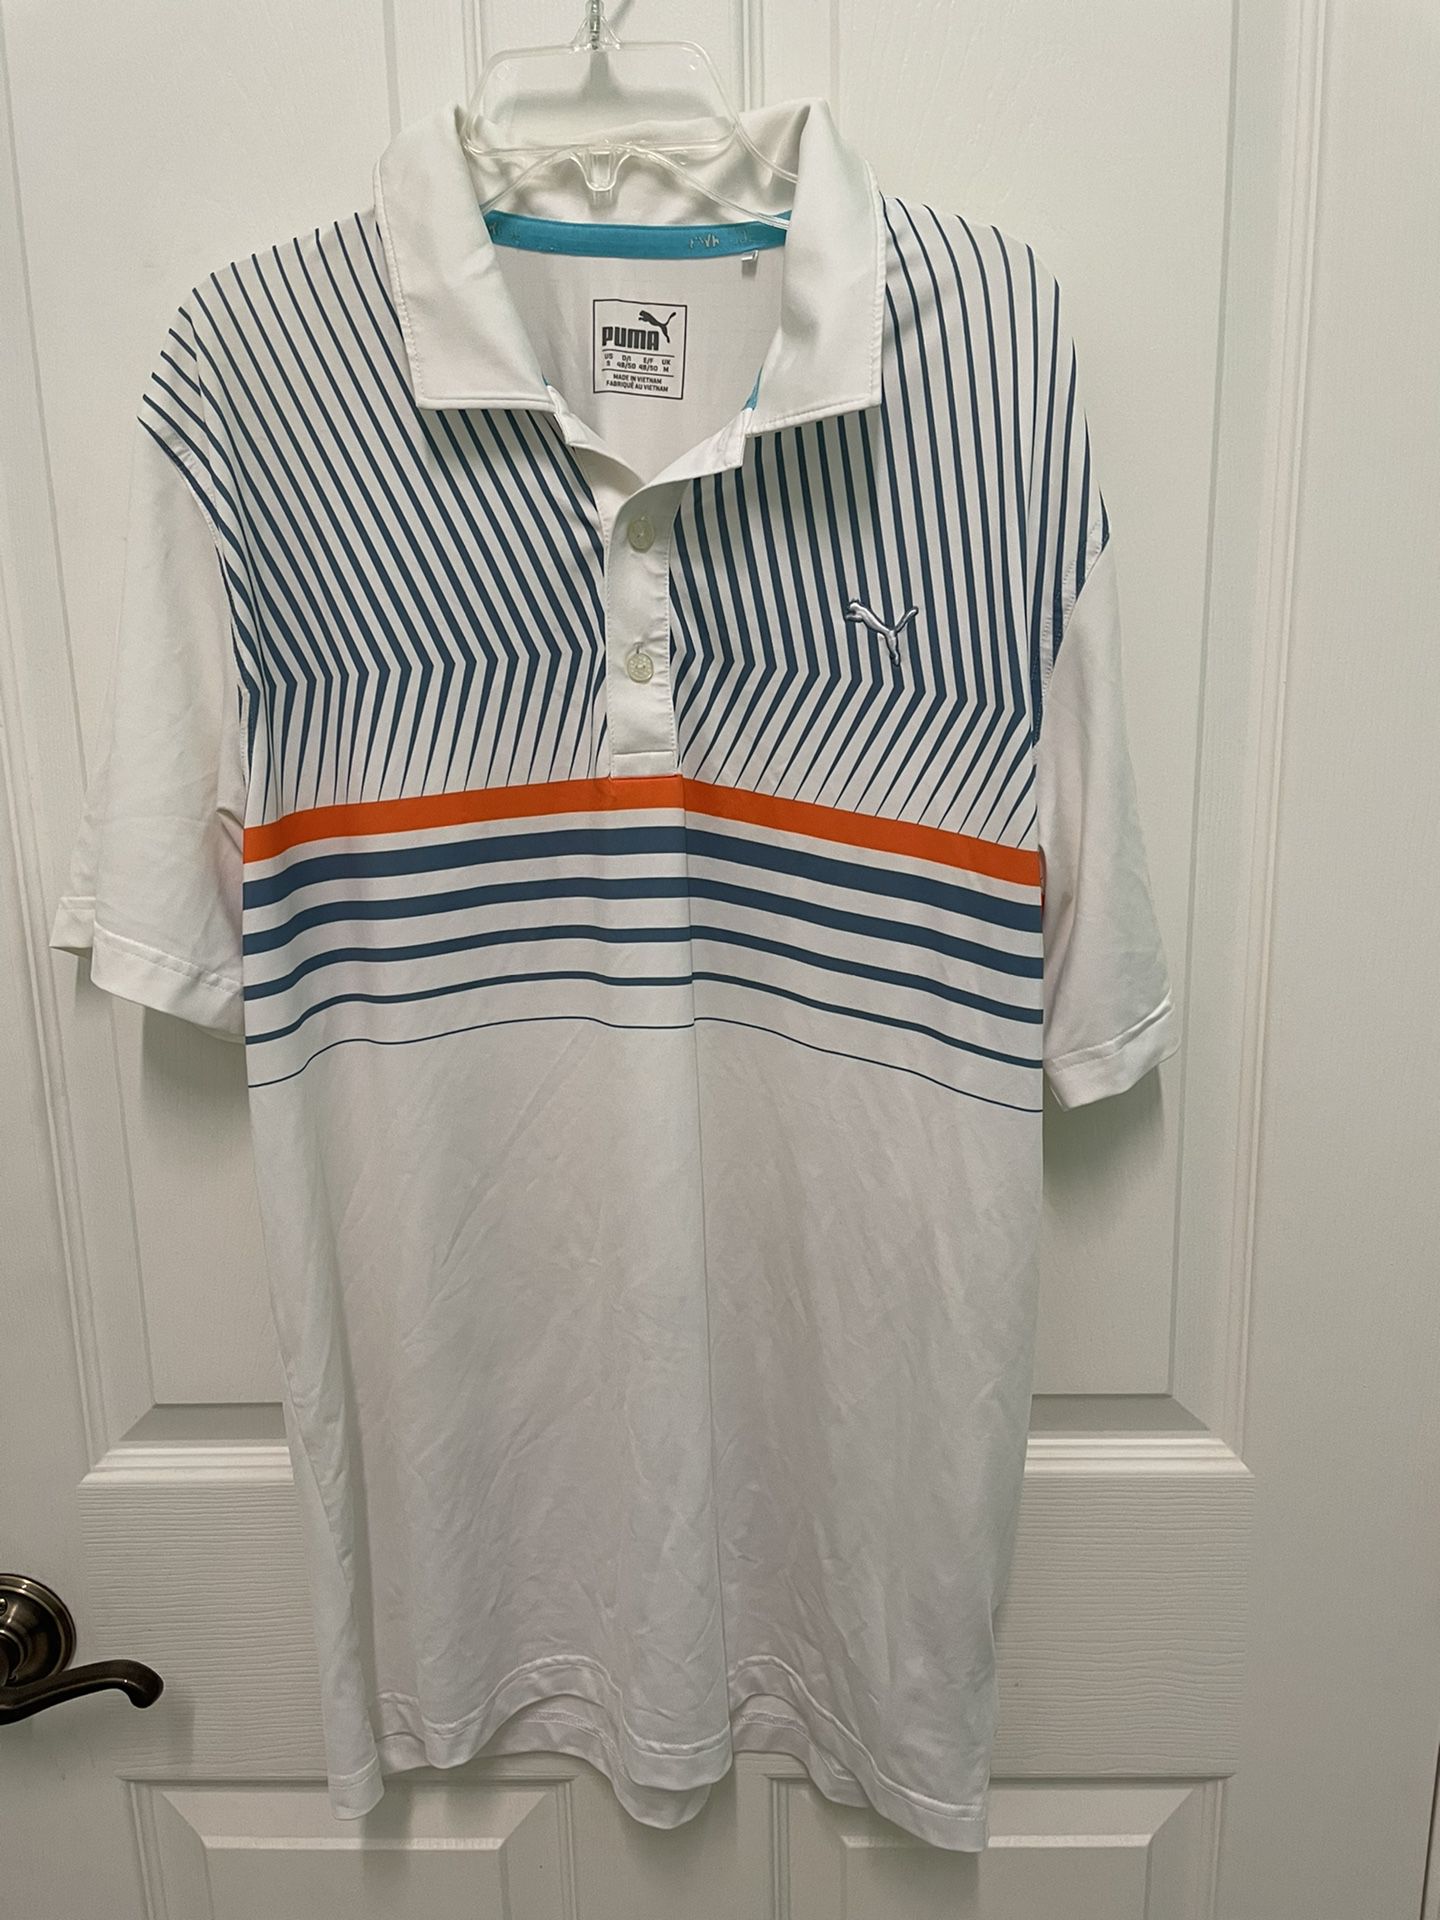 Puma Men’s golf shirt Size Small